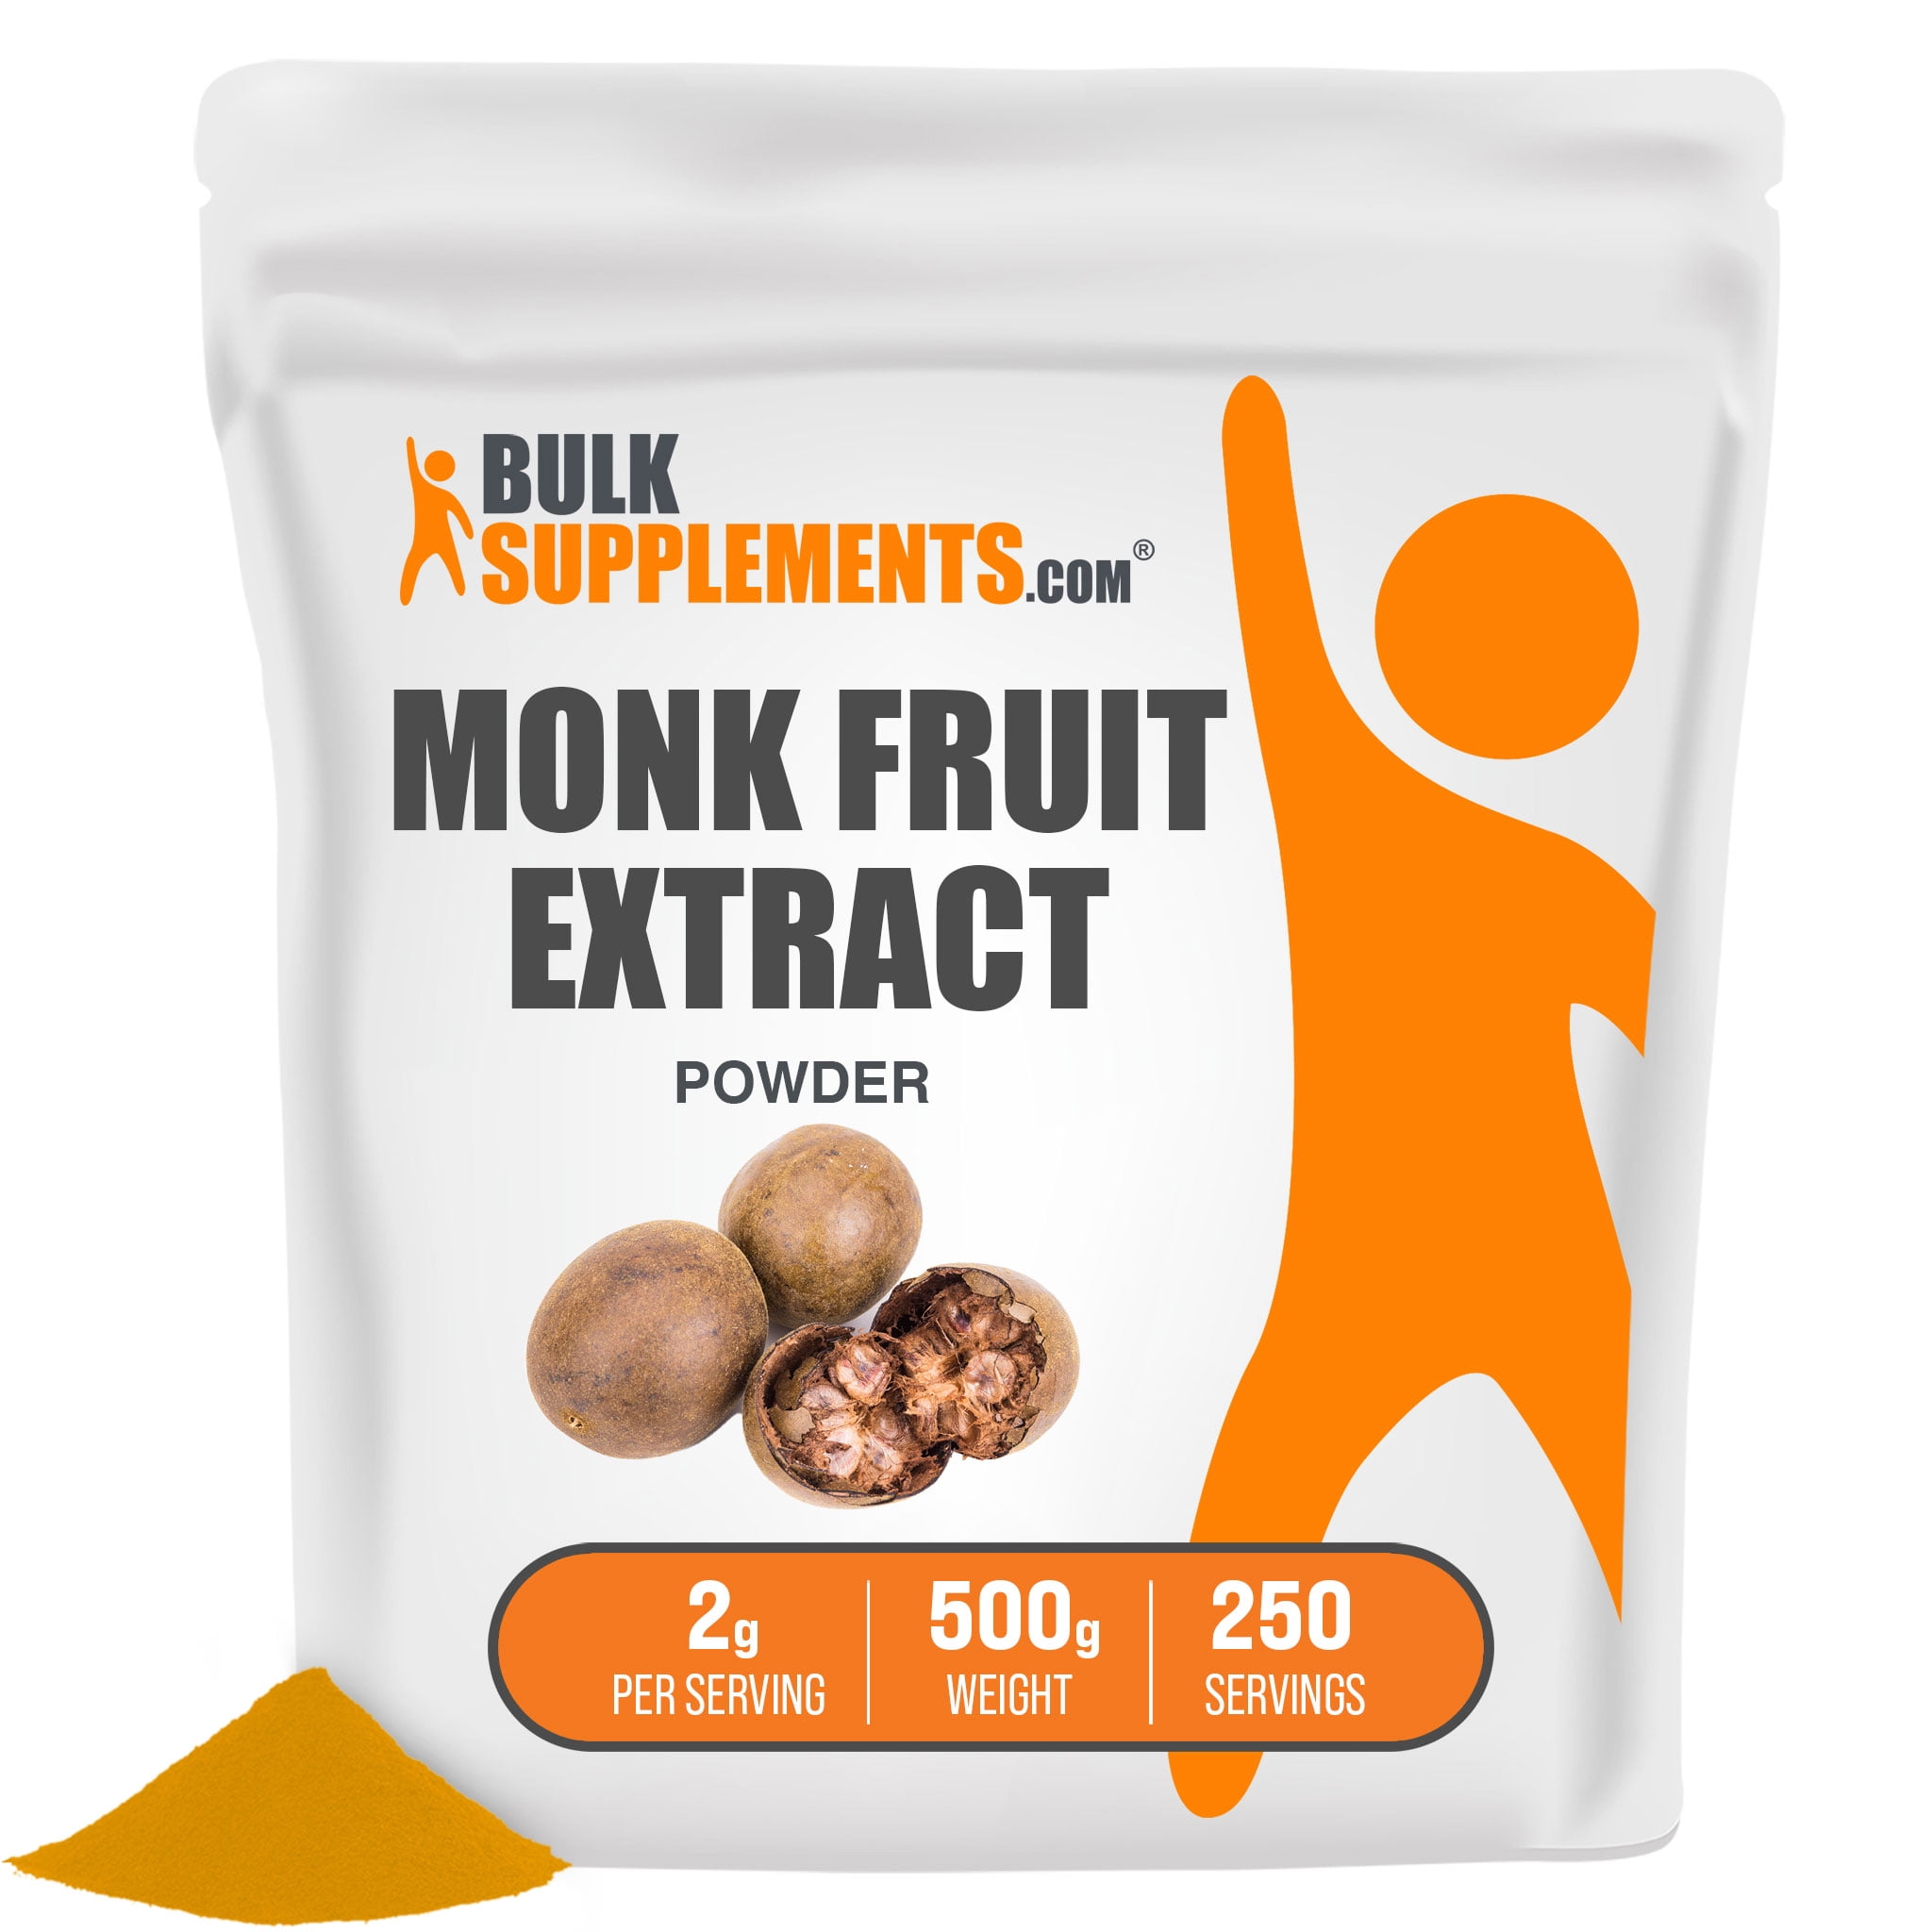 Monk Fruit Sweetener: Good or Bad?